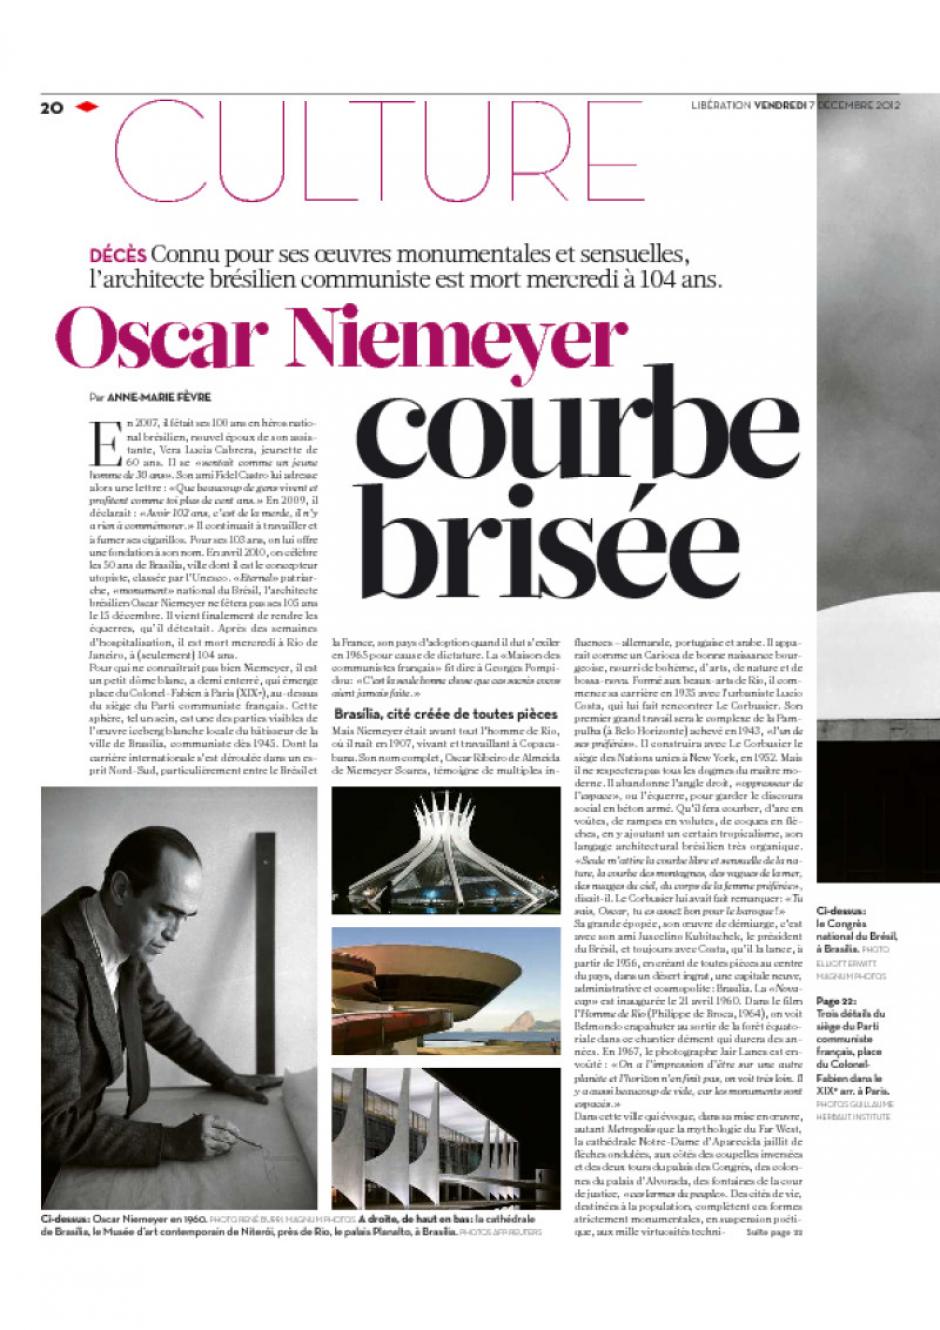 20121207-Libération-Oscar Niemeyer, courbe brisée